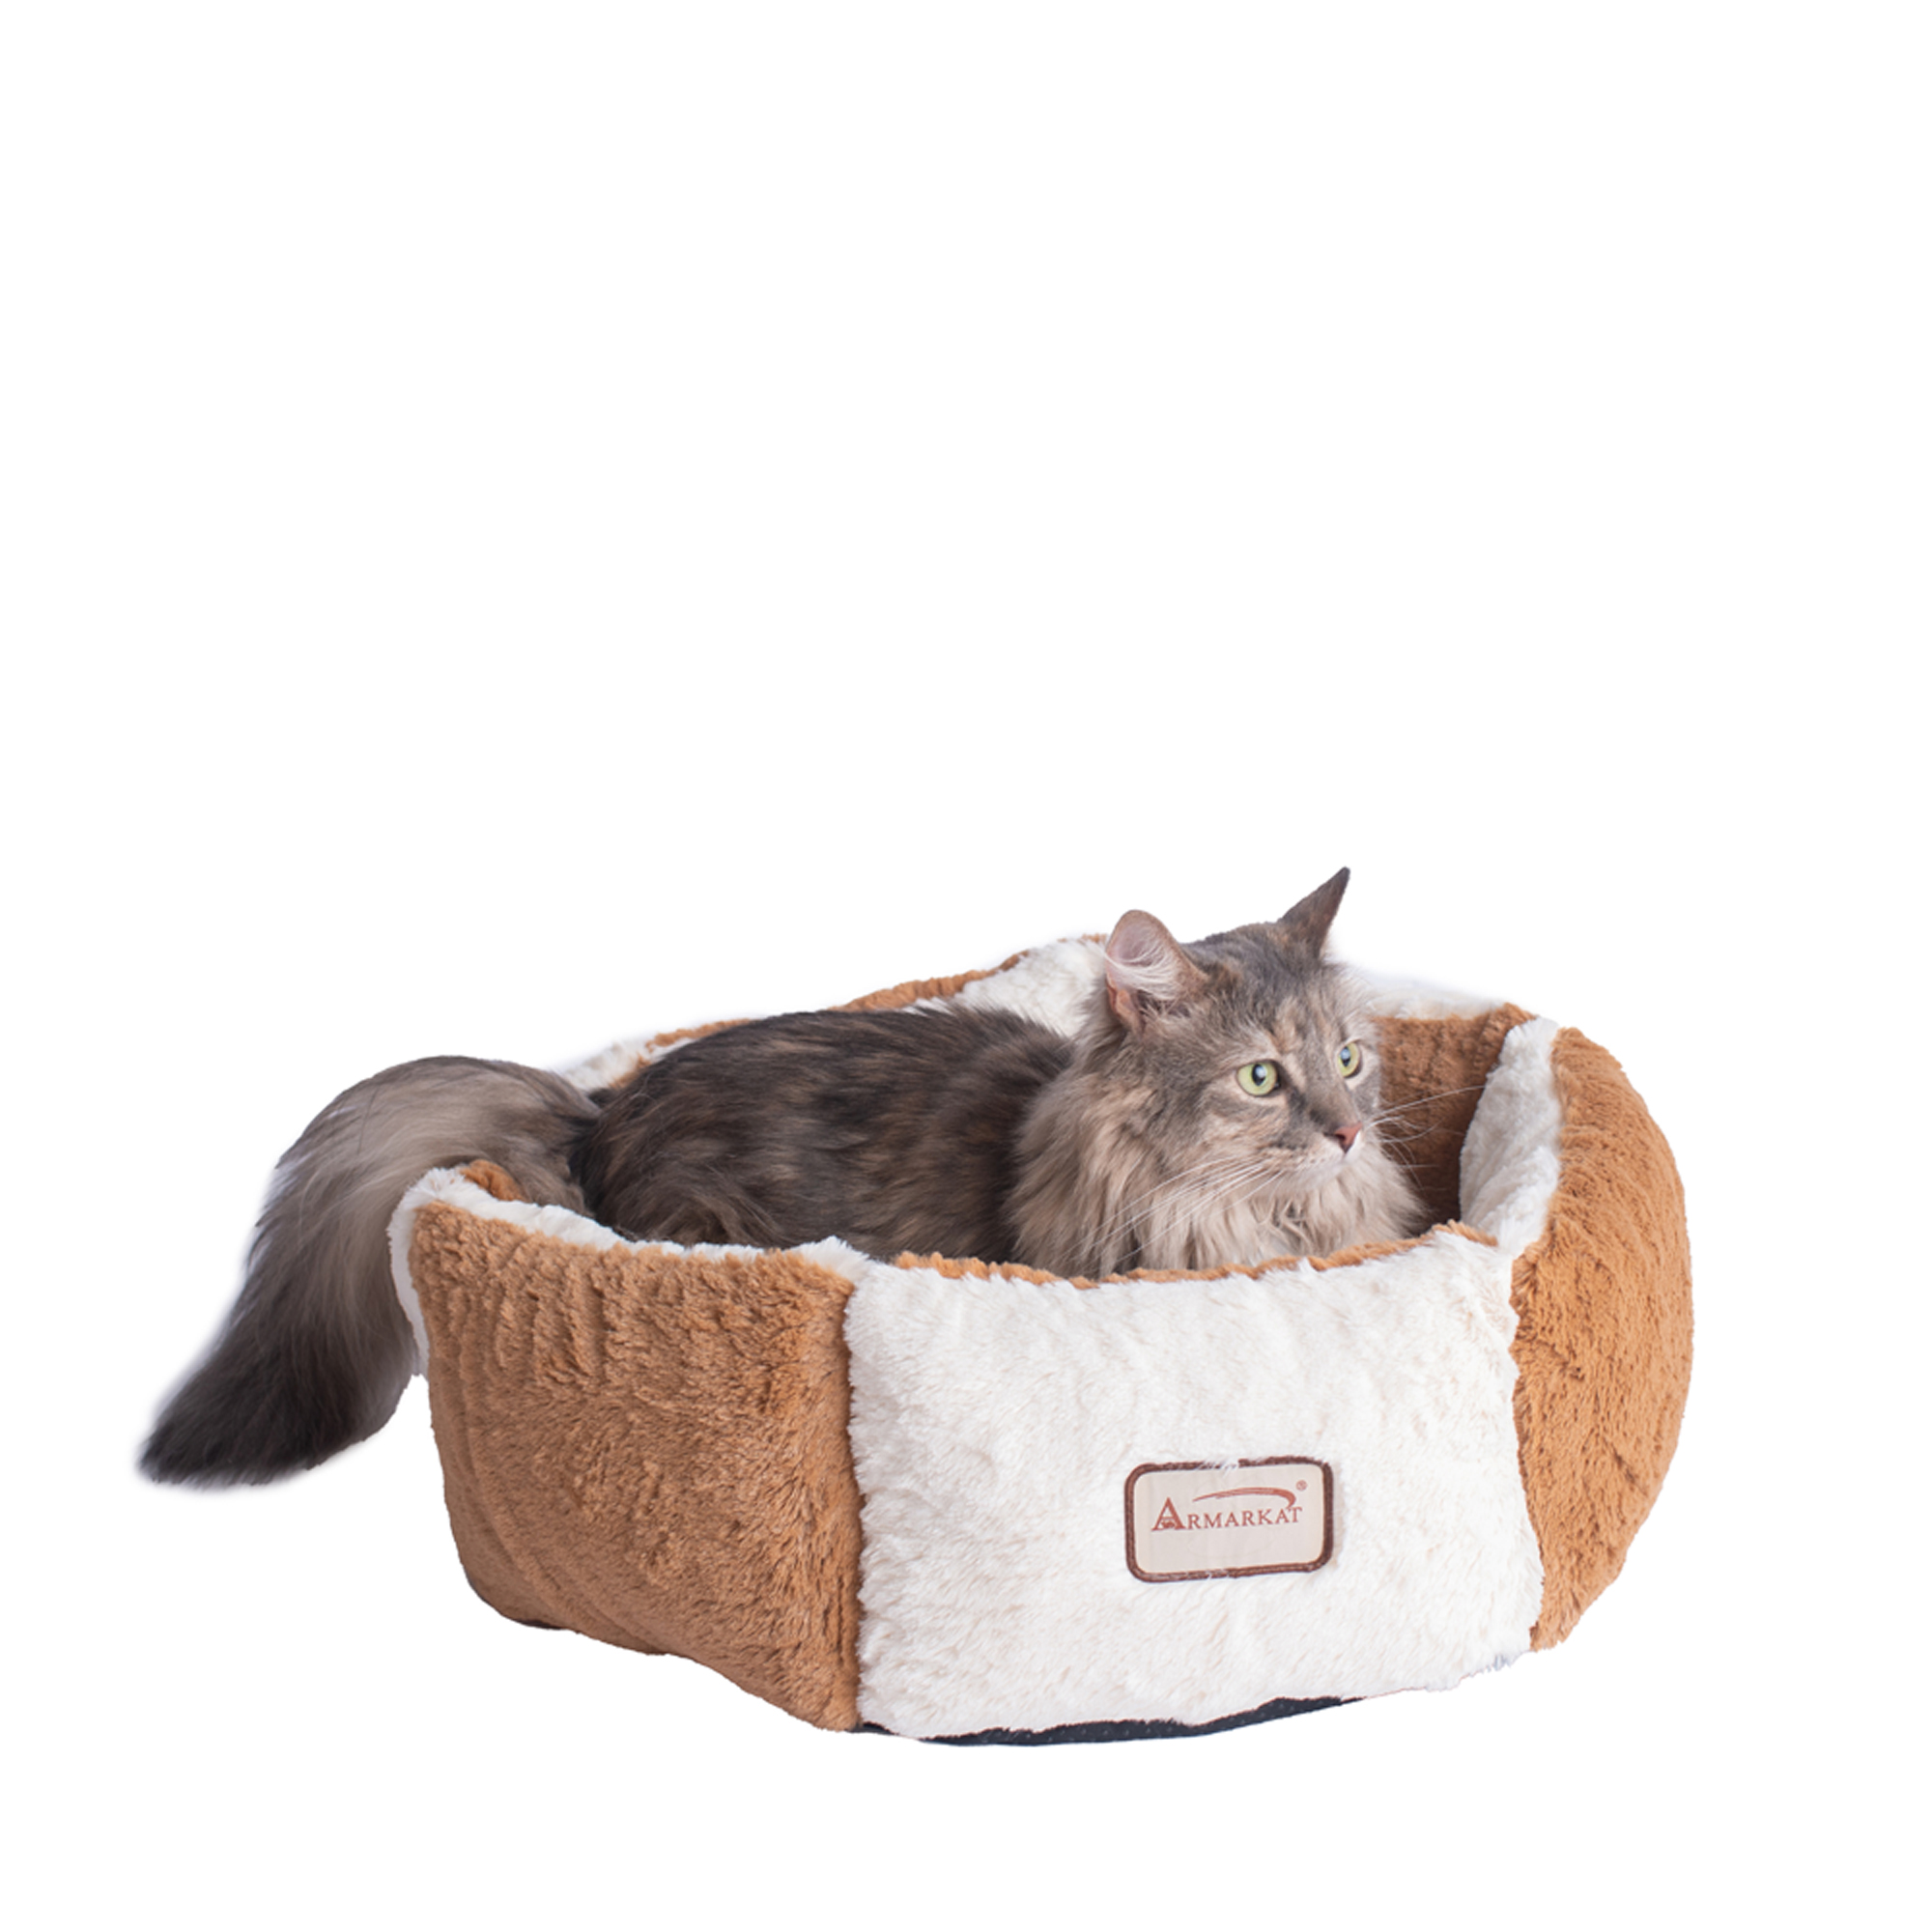 C02nzs-mb Armarkat Pet Bed Cat Bed 20 X 20 X 8 - Brown & Ivory